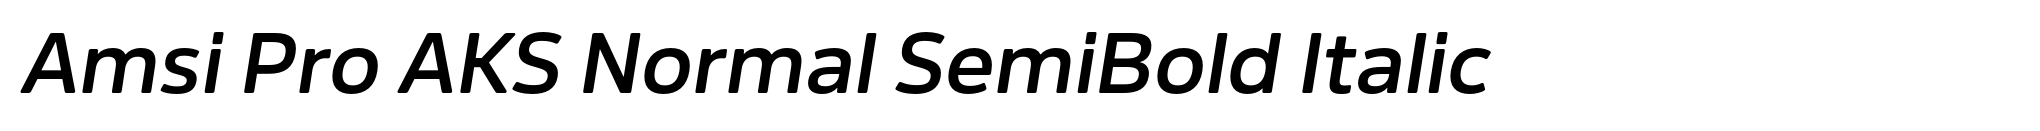 Amsi Pro AKS Normal SemiBold Italic image